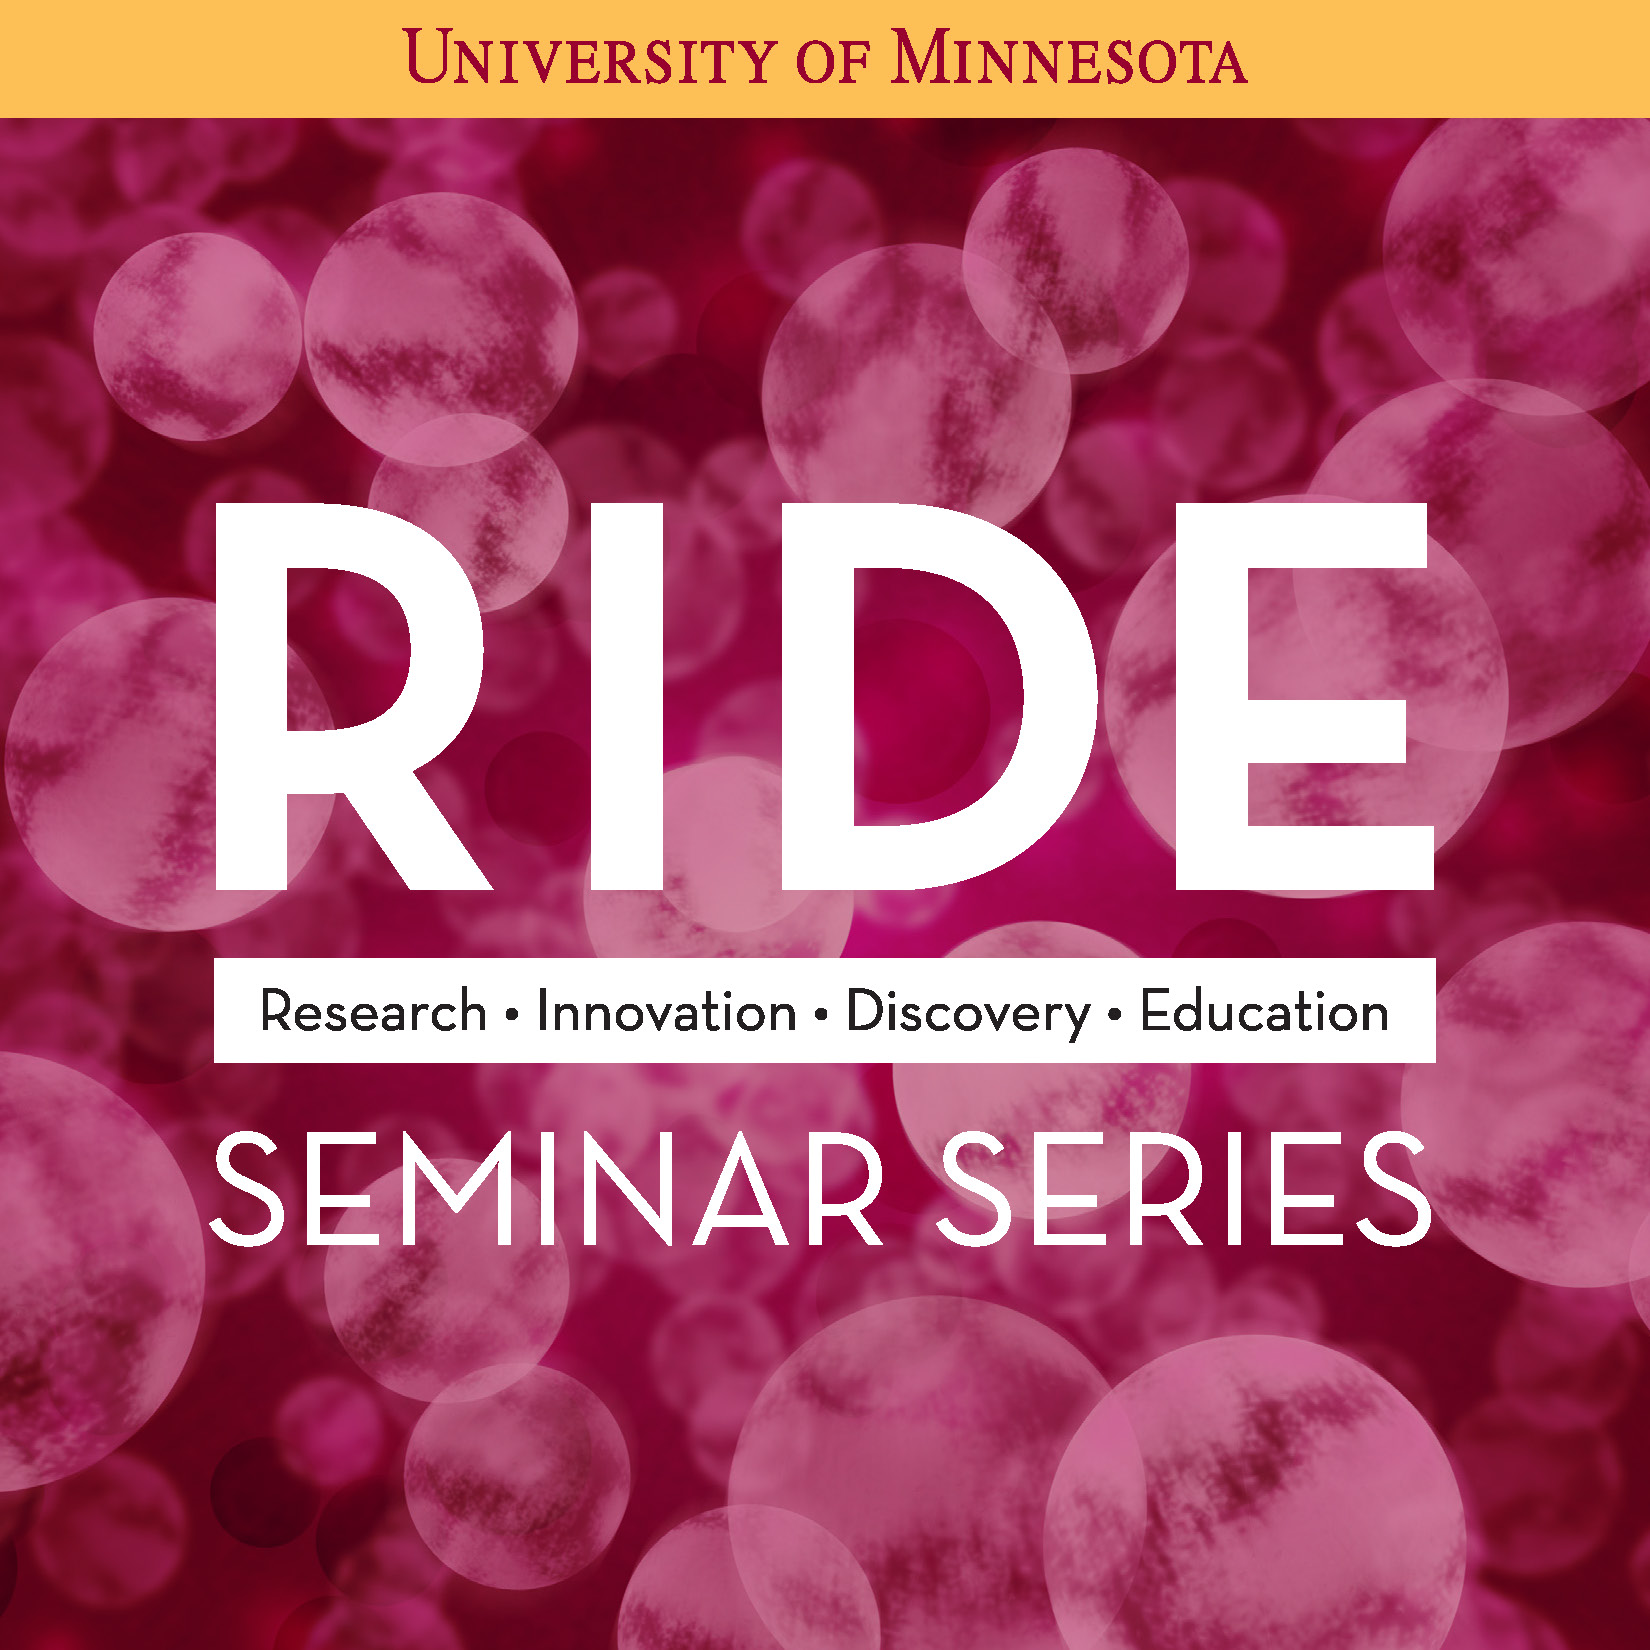 RIDE Seminar Series Logo